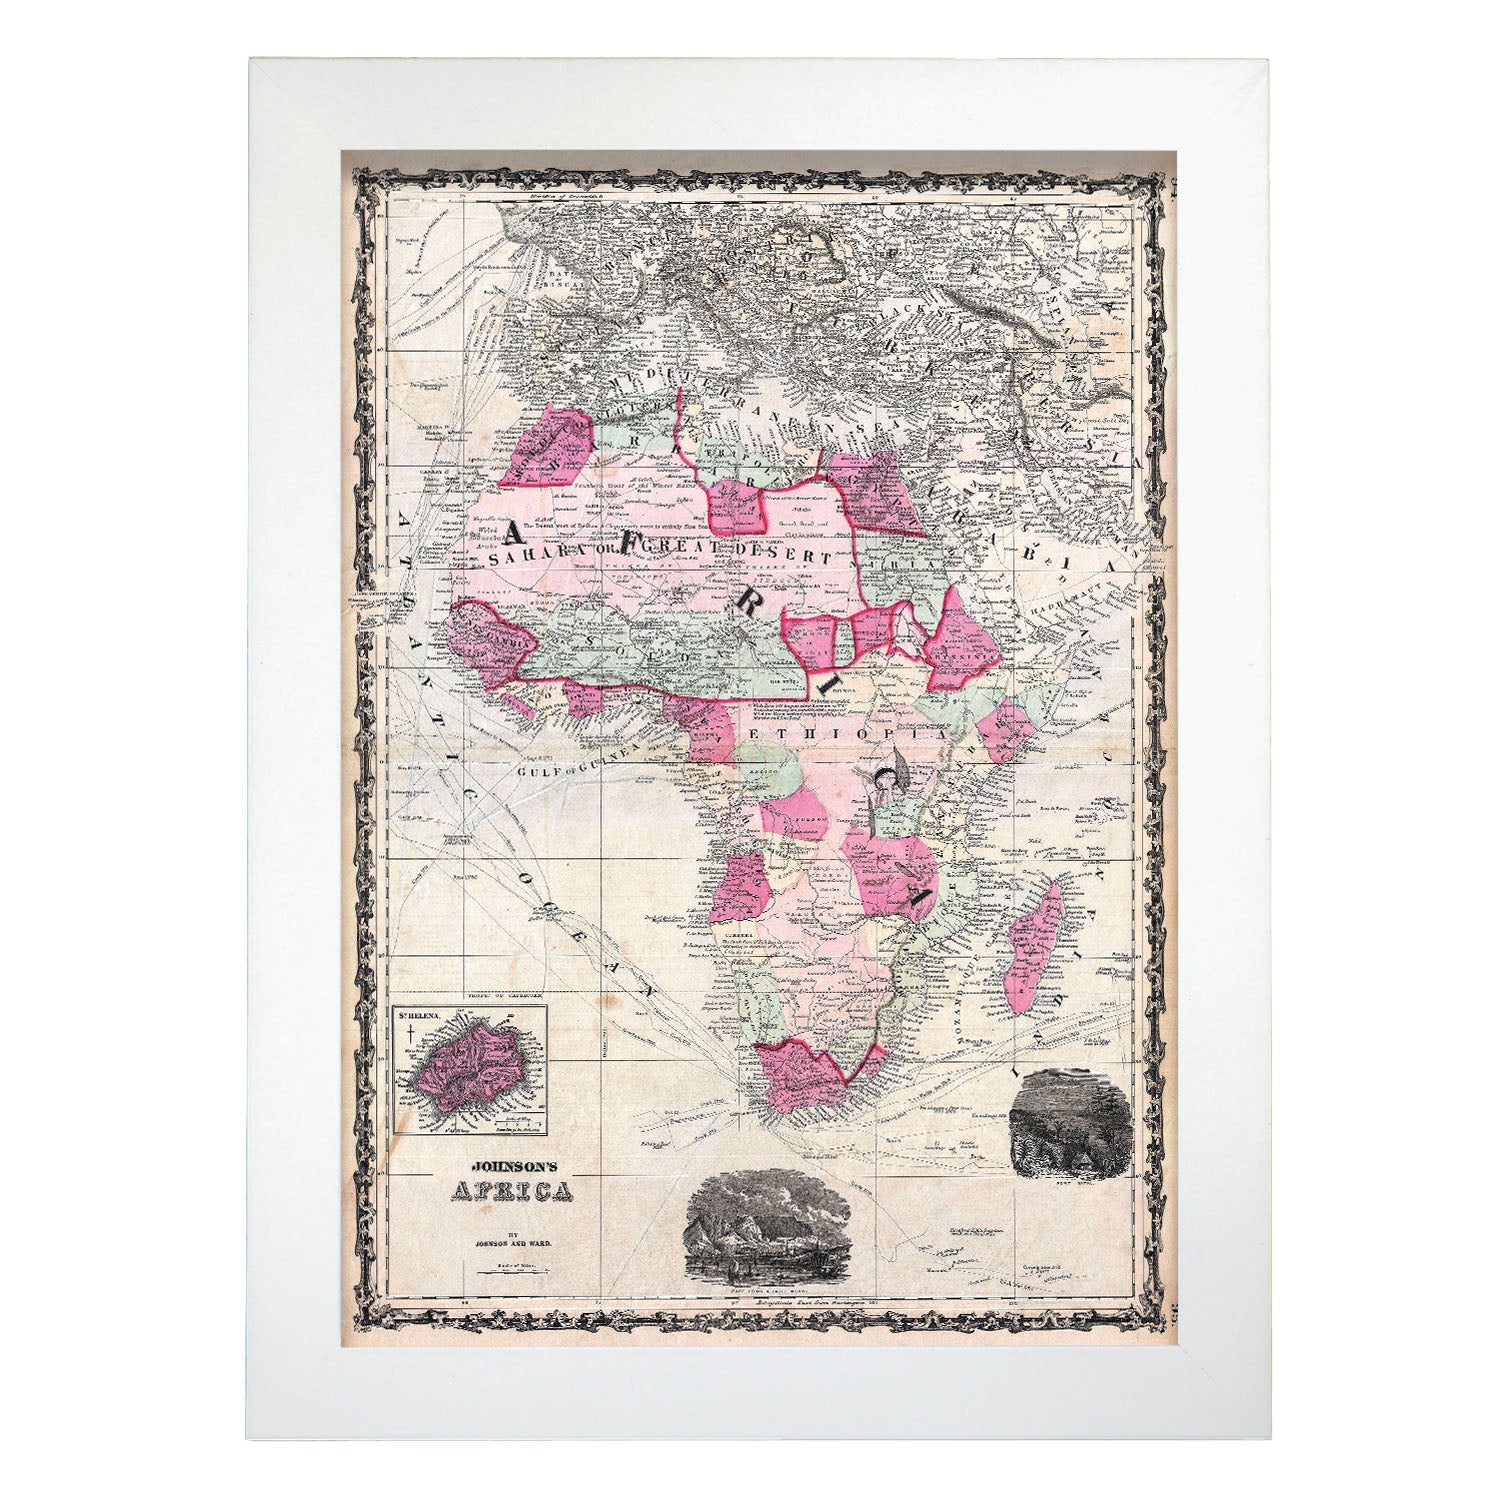 1862 Johnson Map of Africa Geographicus Afria johnson 1862-Artwork-Nacnic-A4-Marco Blanco-Nacnic Estudio SL